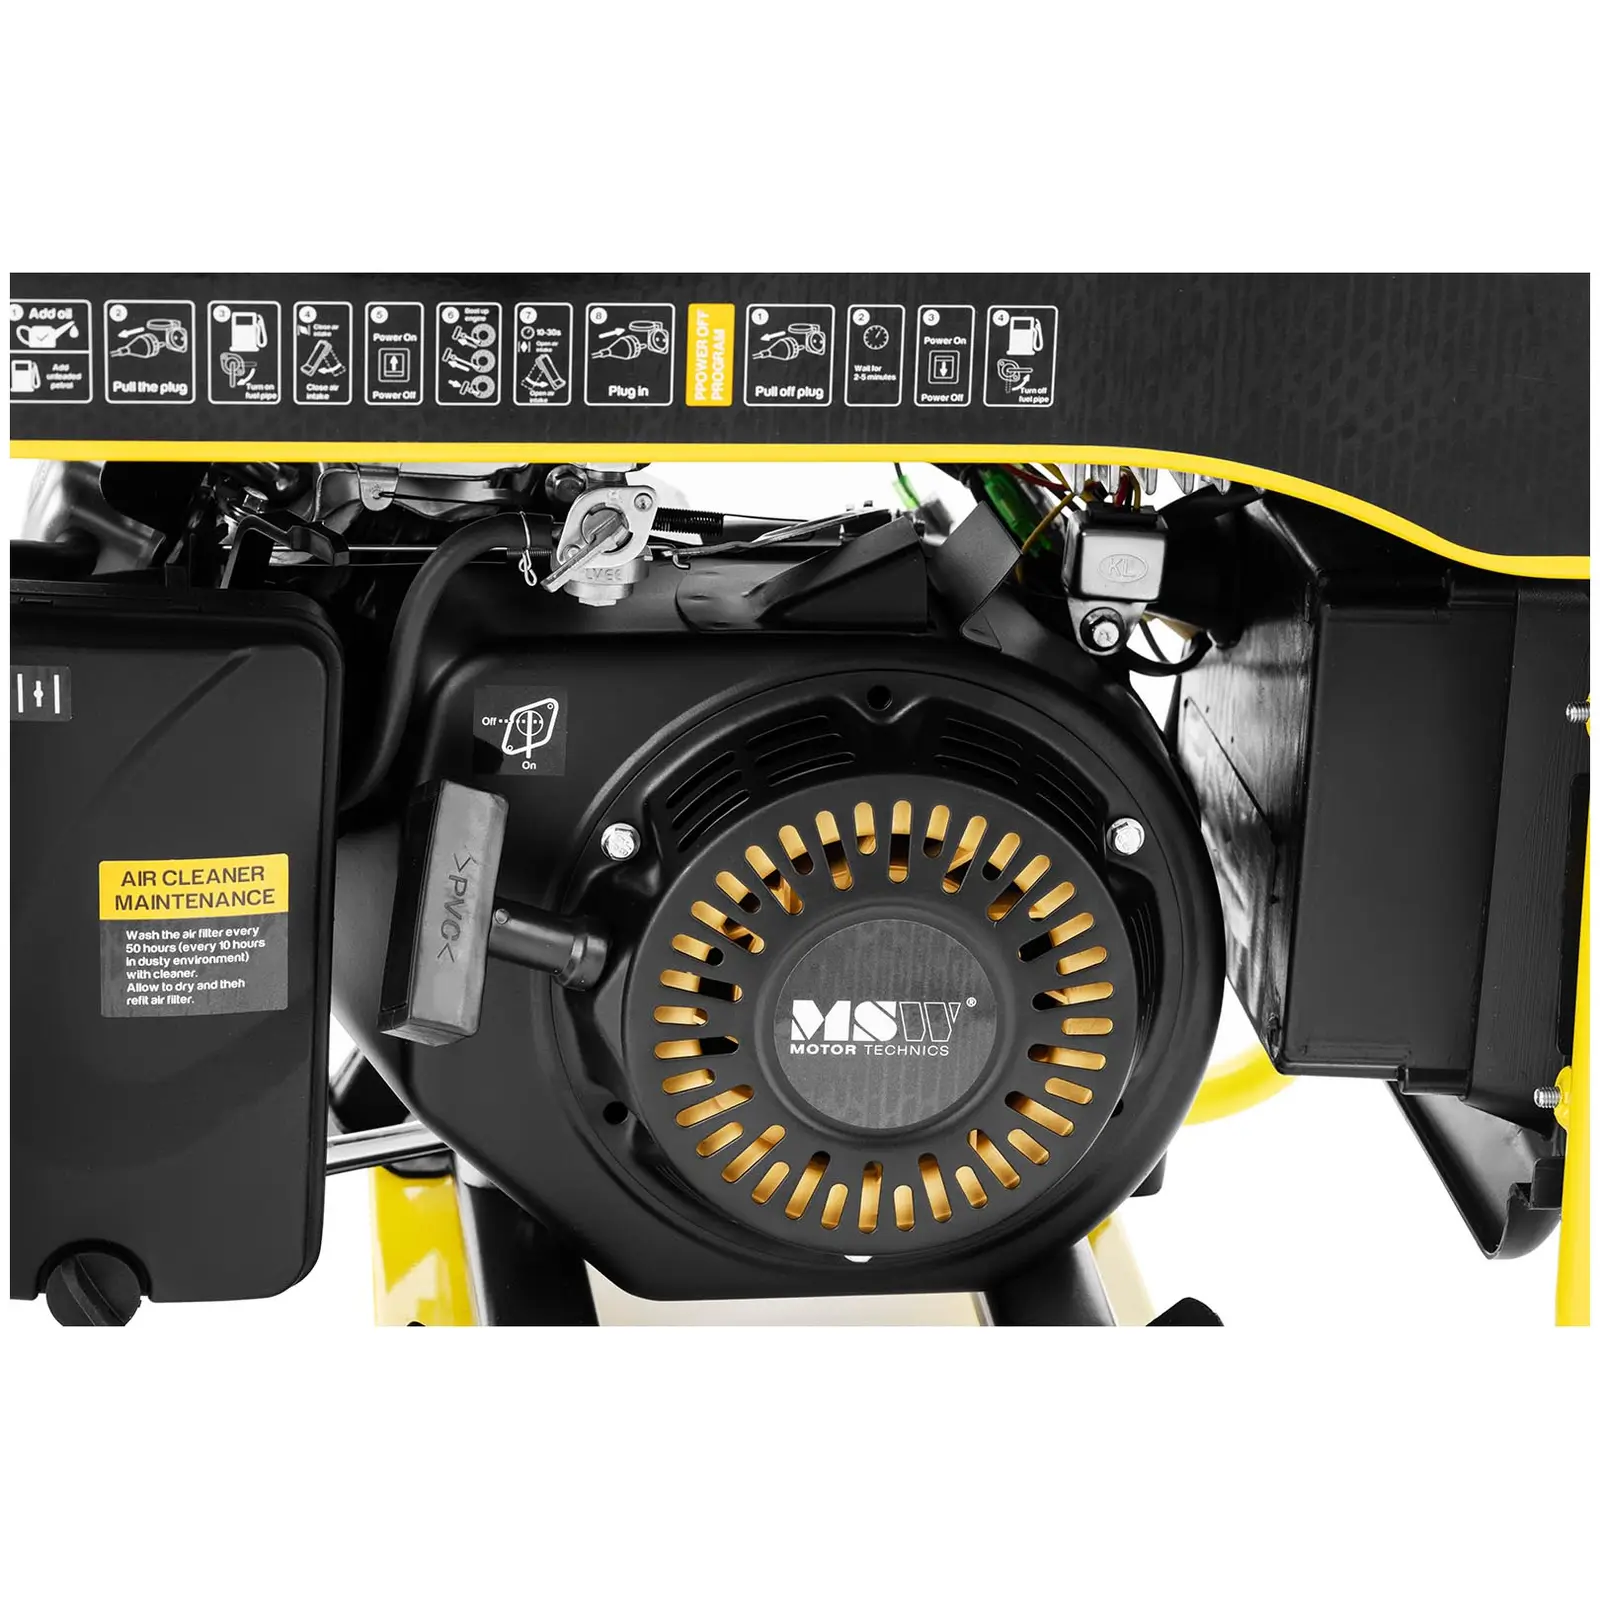 Generador eléctrico Inverter de gasolina - 3800 W - 230 V AC - arranque manual